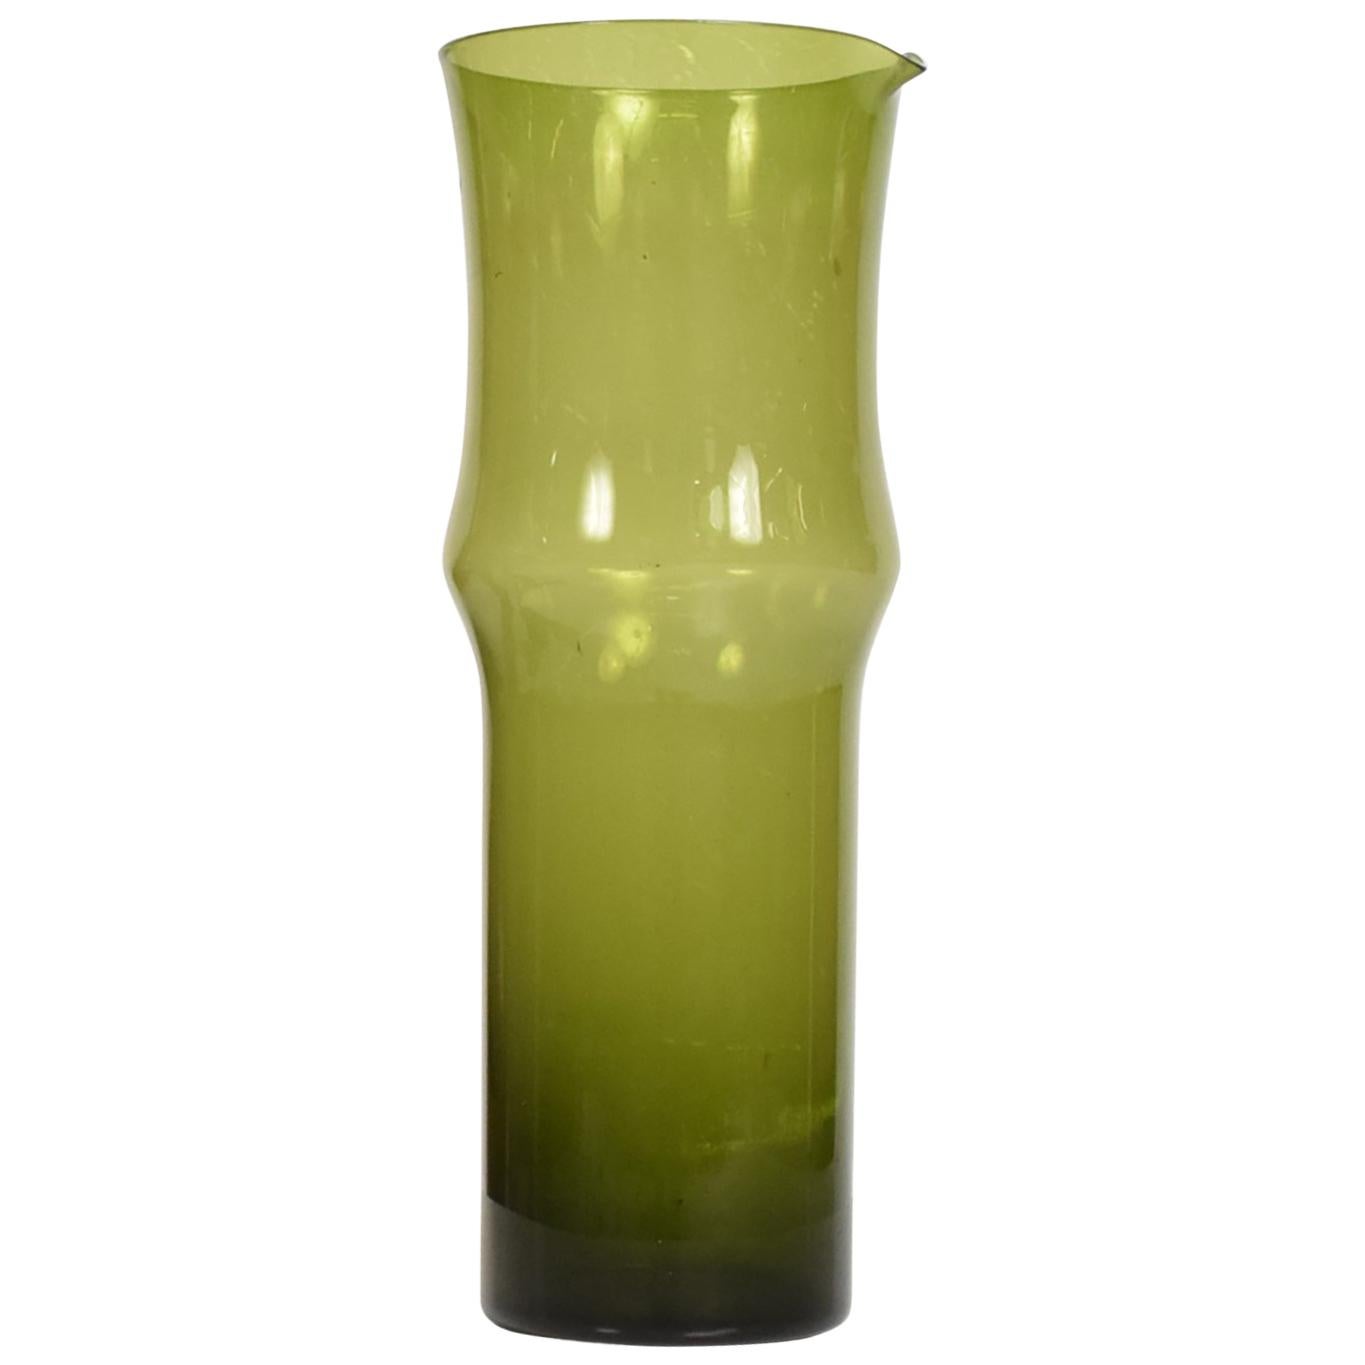 Green Glass Pitcher Vase by Tapio Wirkkala for Iittala Midcentury Danish Modern